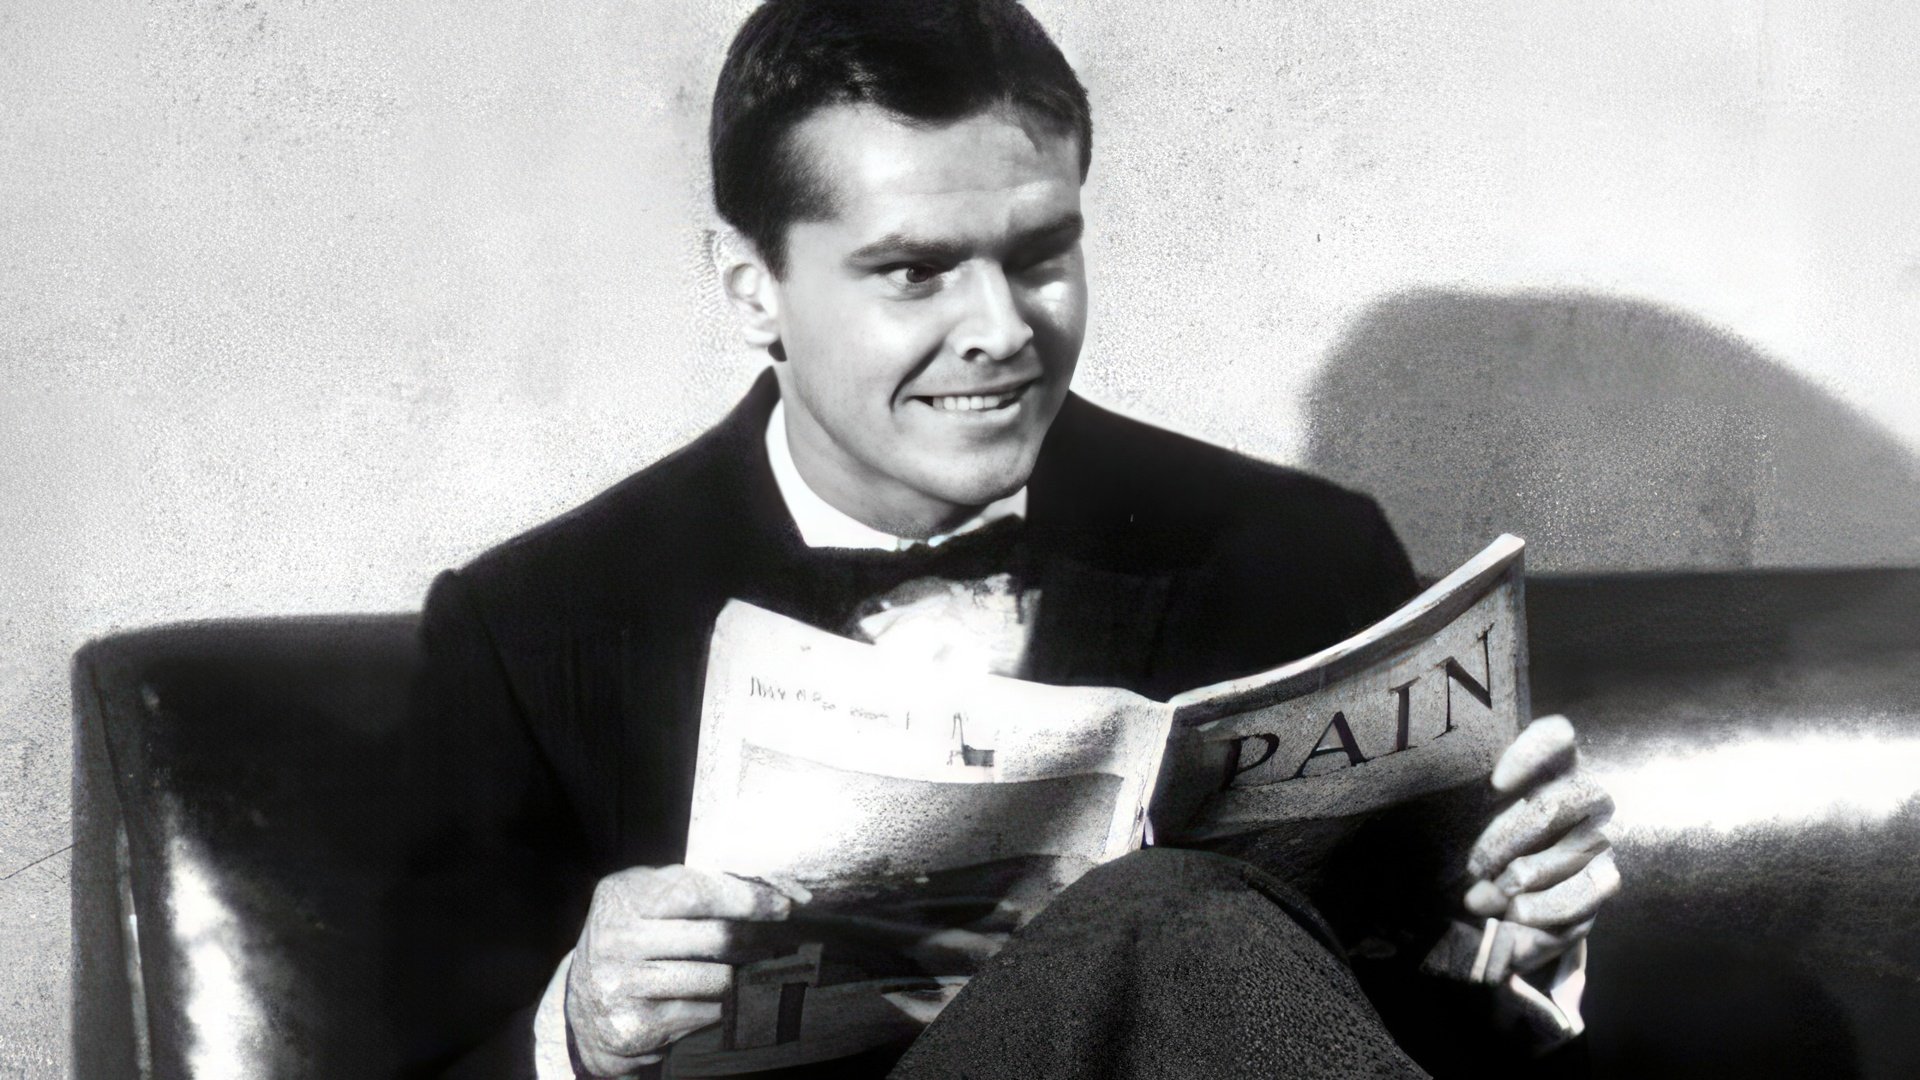 1958: Jack Nicholson's first film role